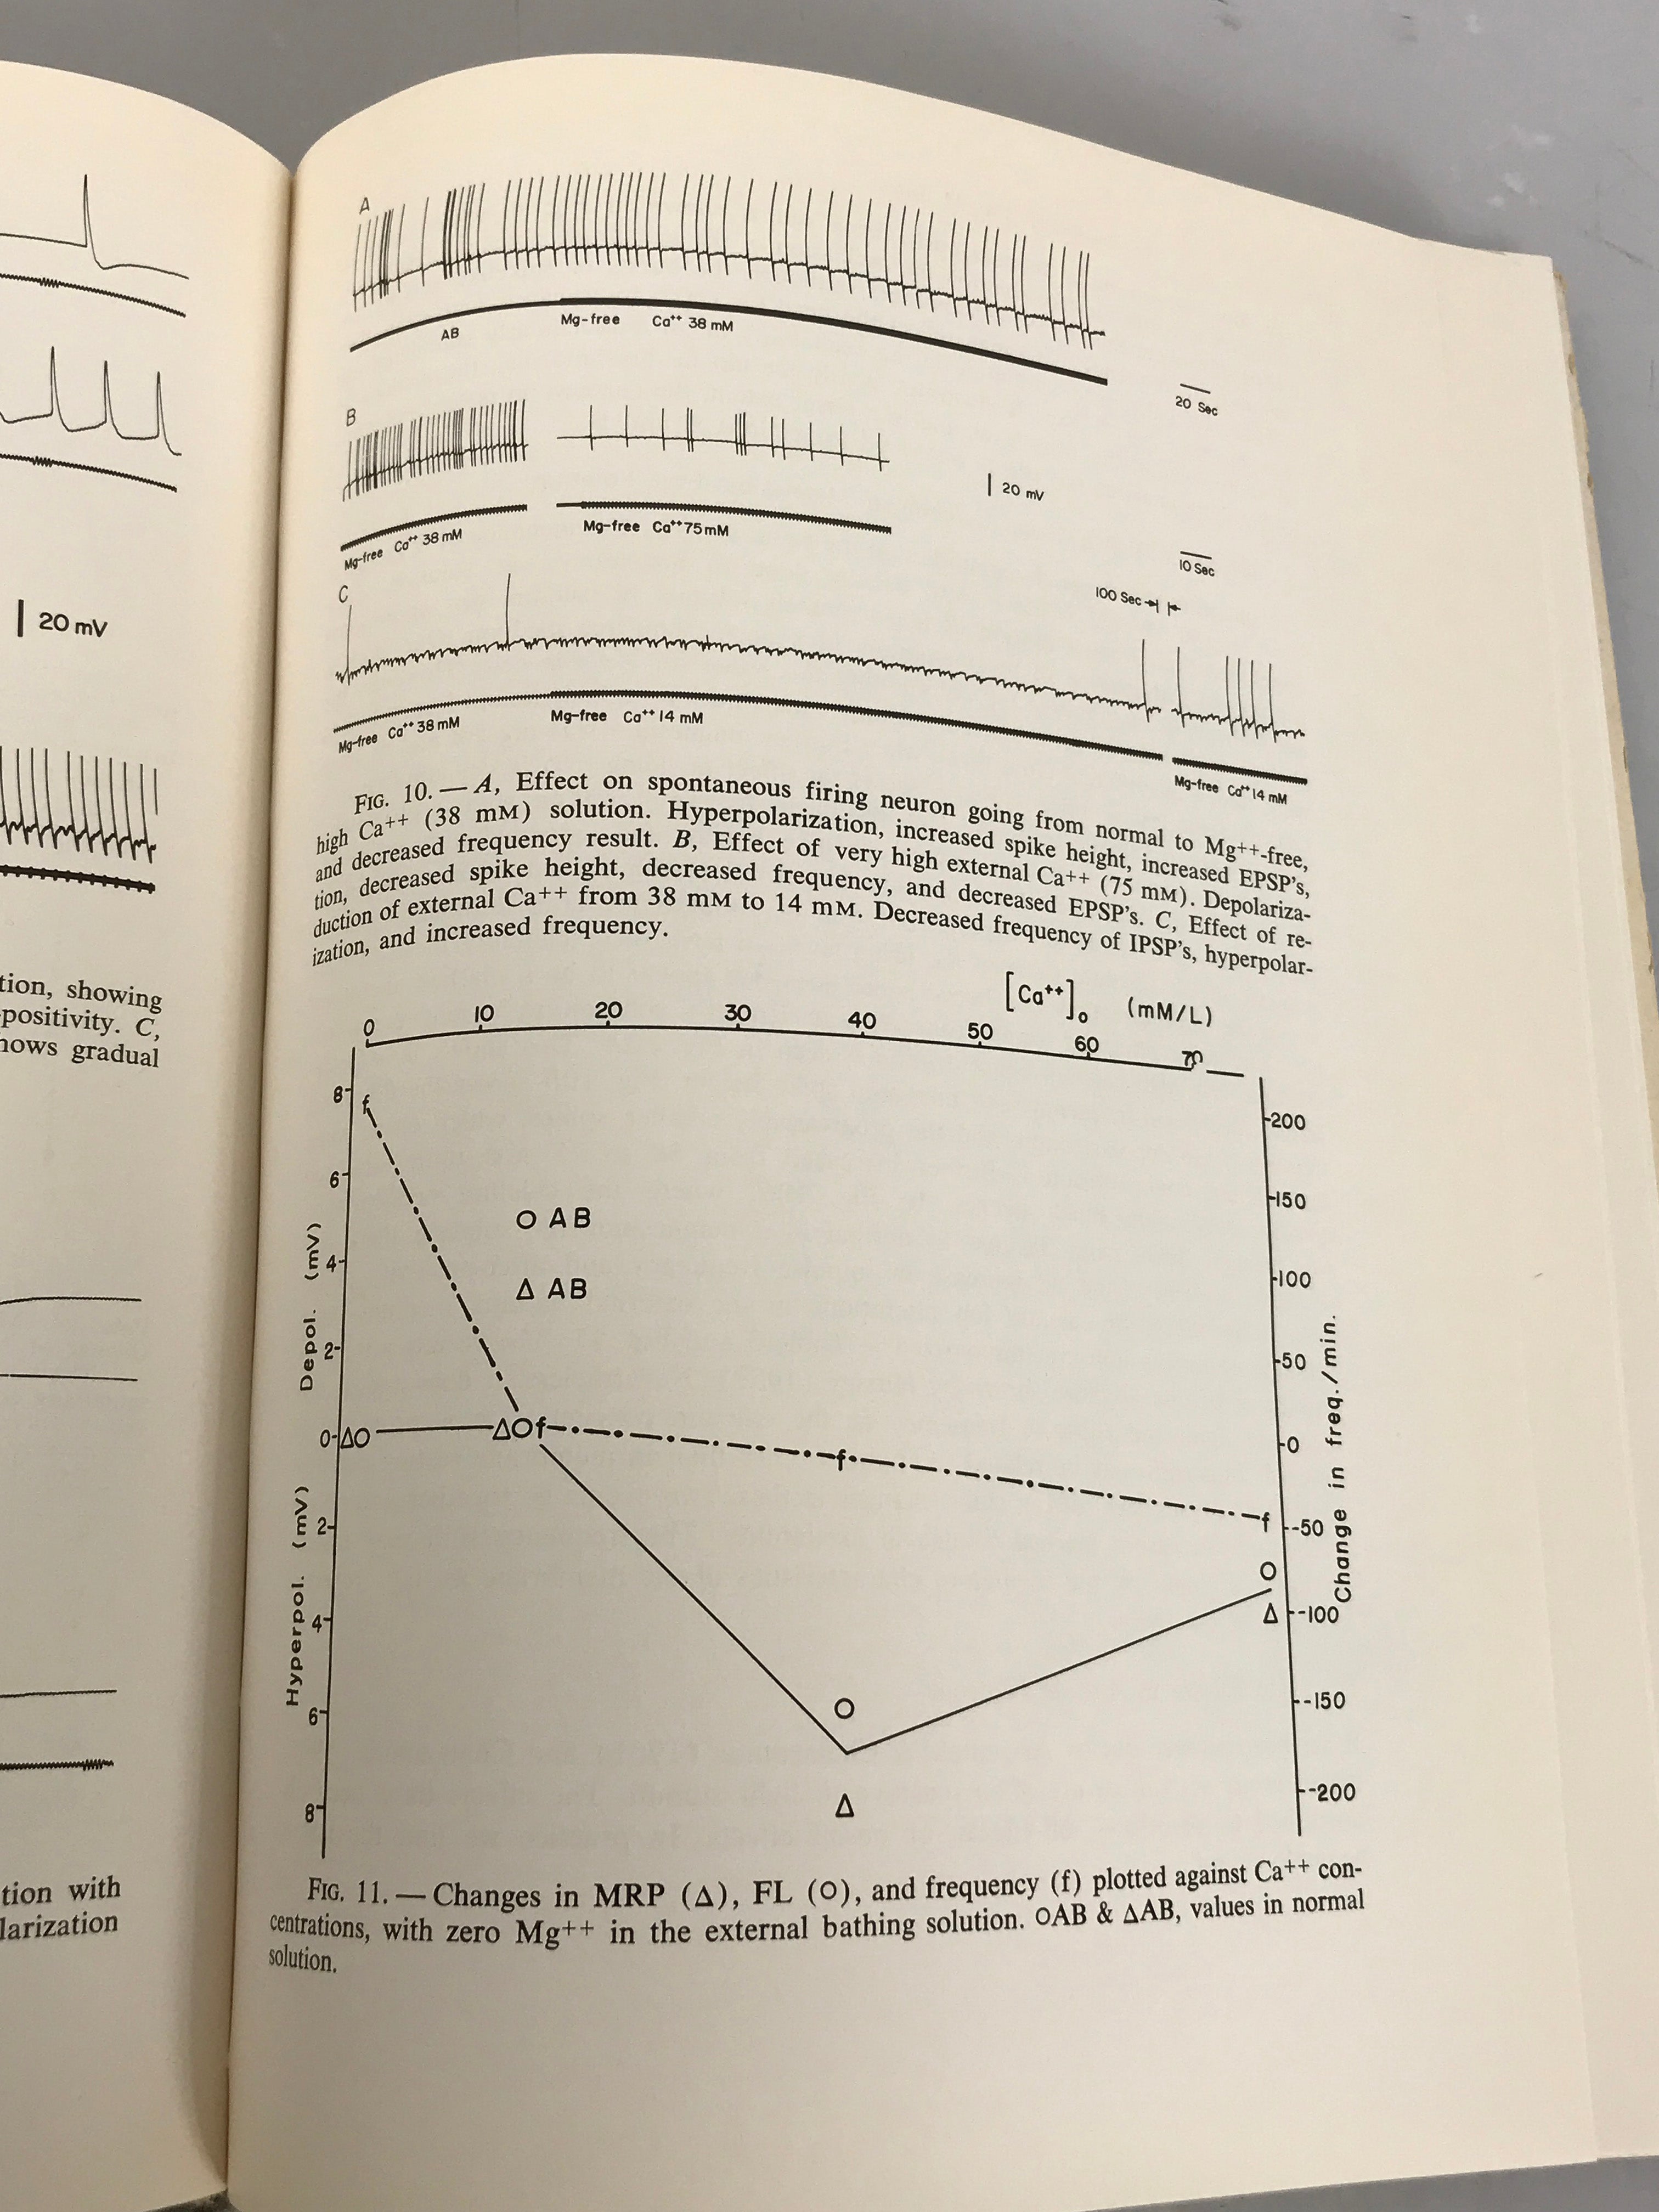 Invertebrate Nervous Systems C.A.G. Wiersma 1967 HC DJ